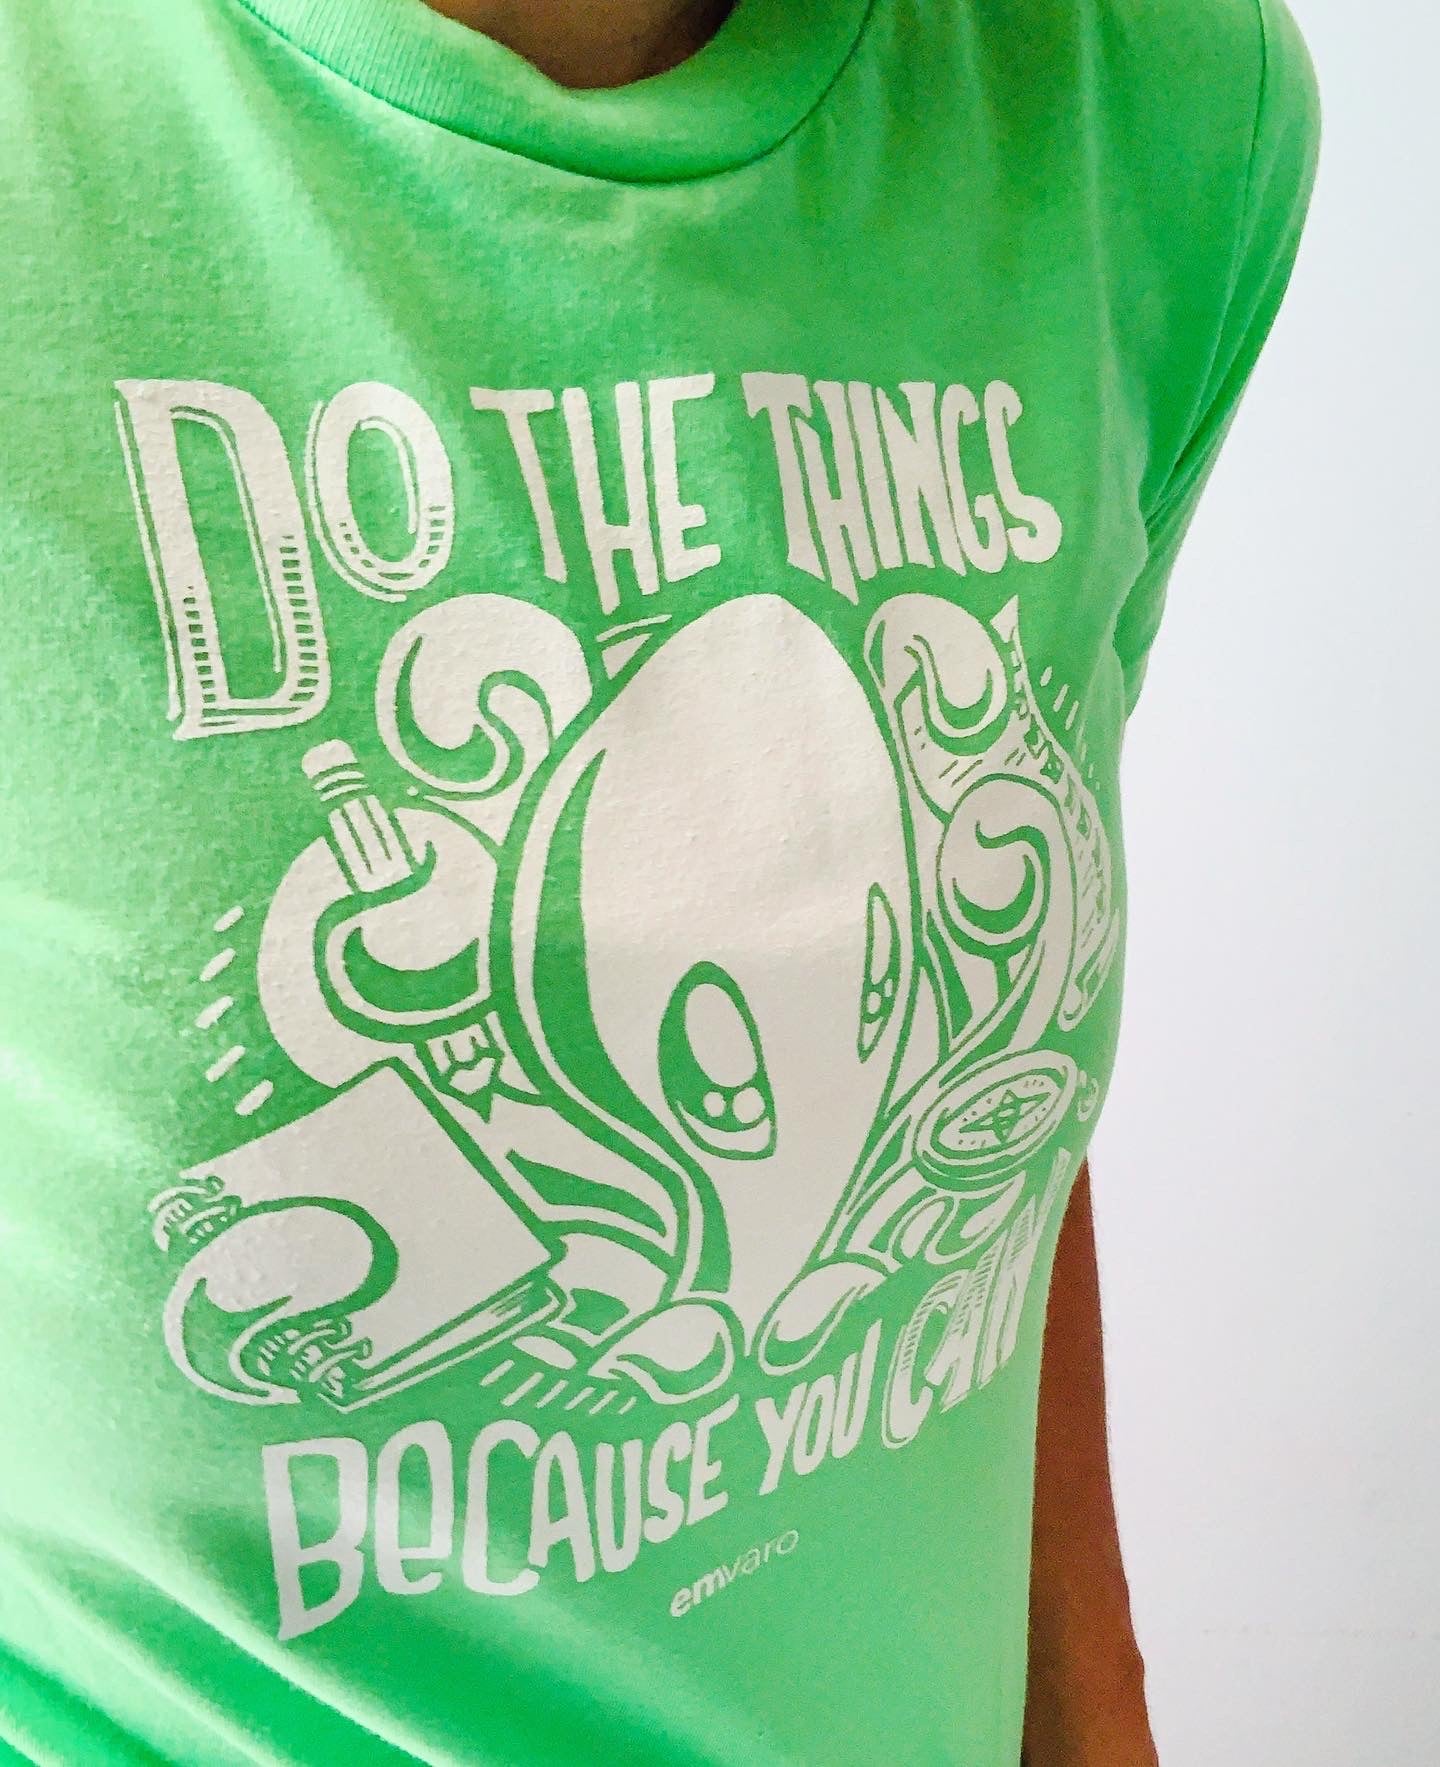 T-shirt: Because You Can - Zeek the Octopus